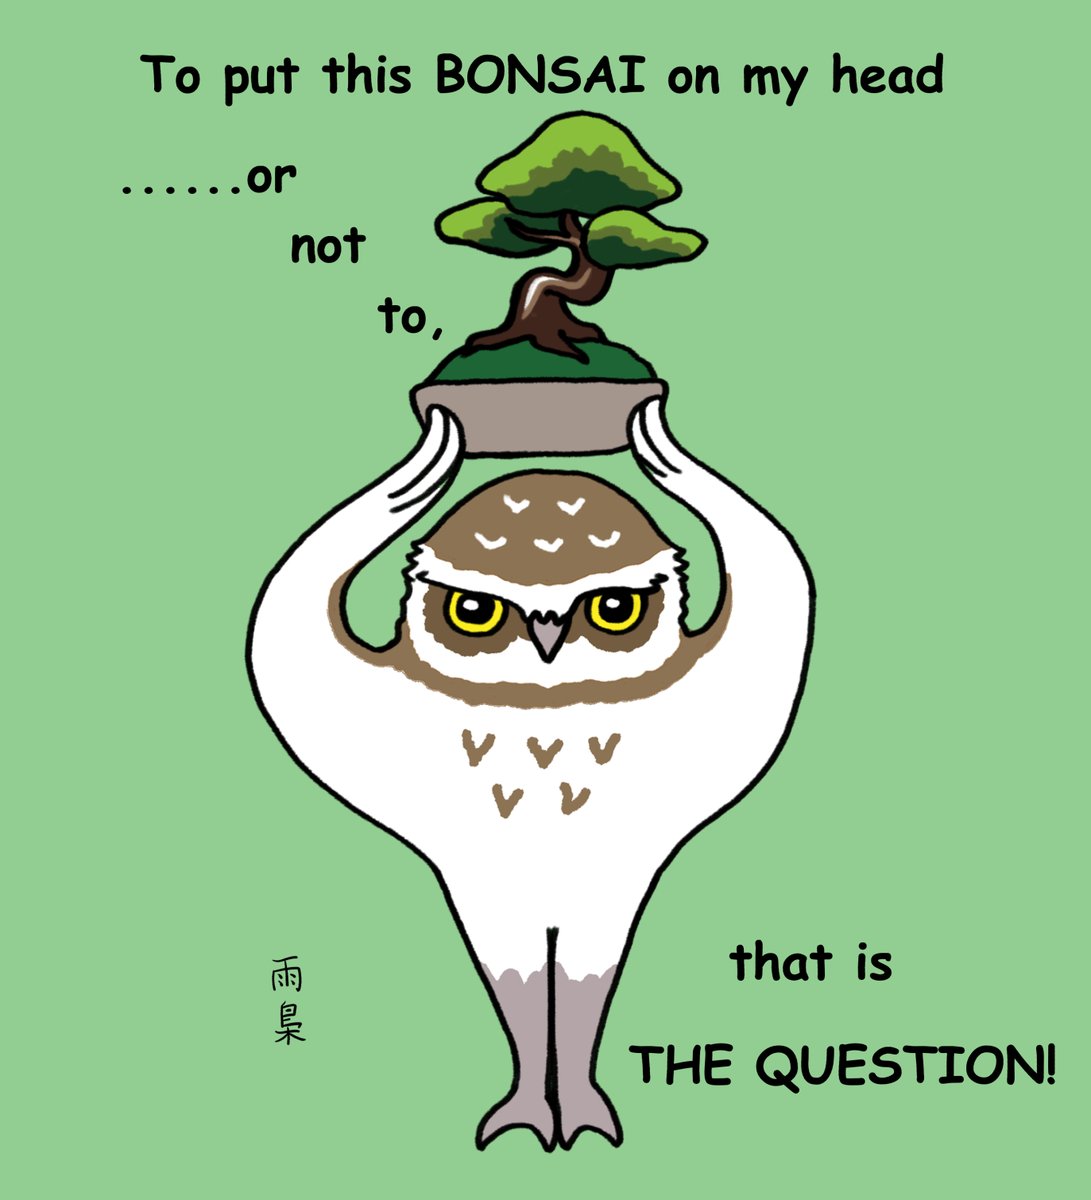 The owl wondering if it should or should not put a bonsai on its head.
#bonsaiowl #bonsai #burrowingowl #illustration #ukyosaito